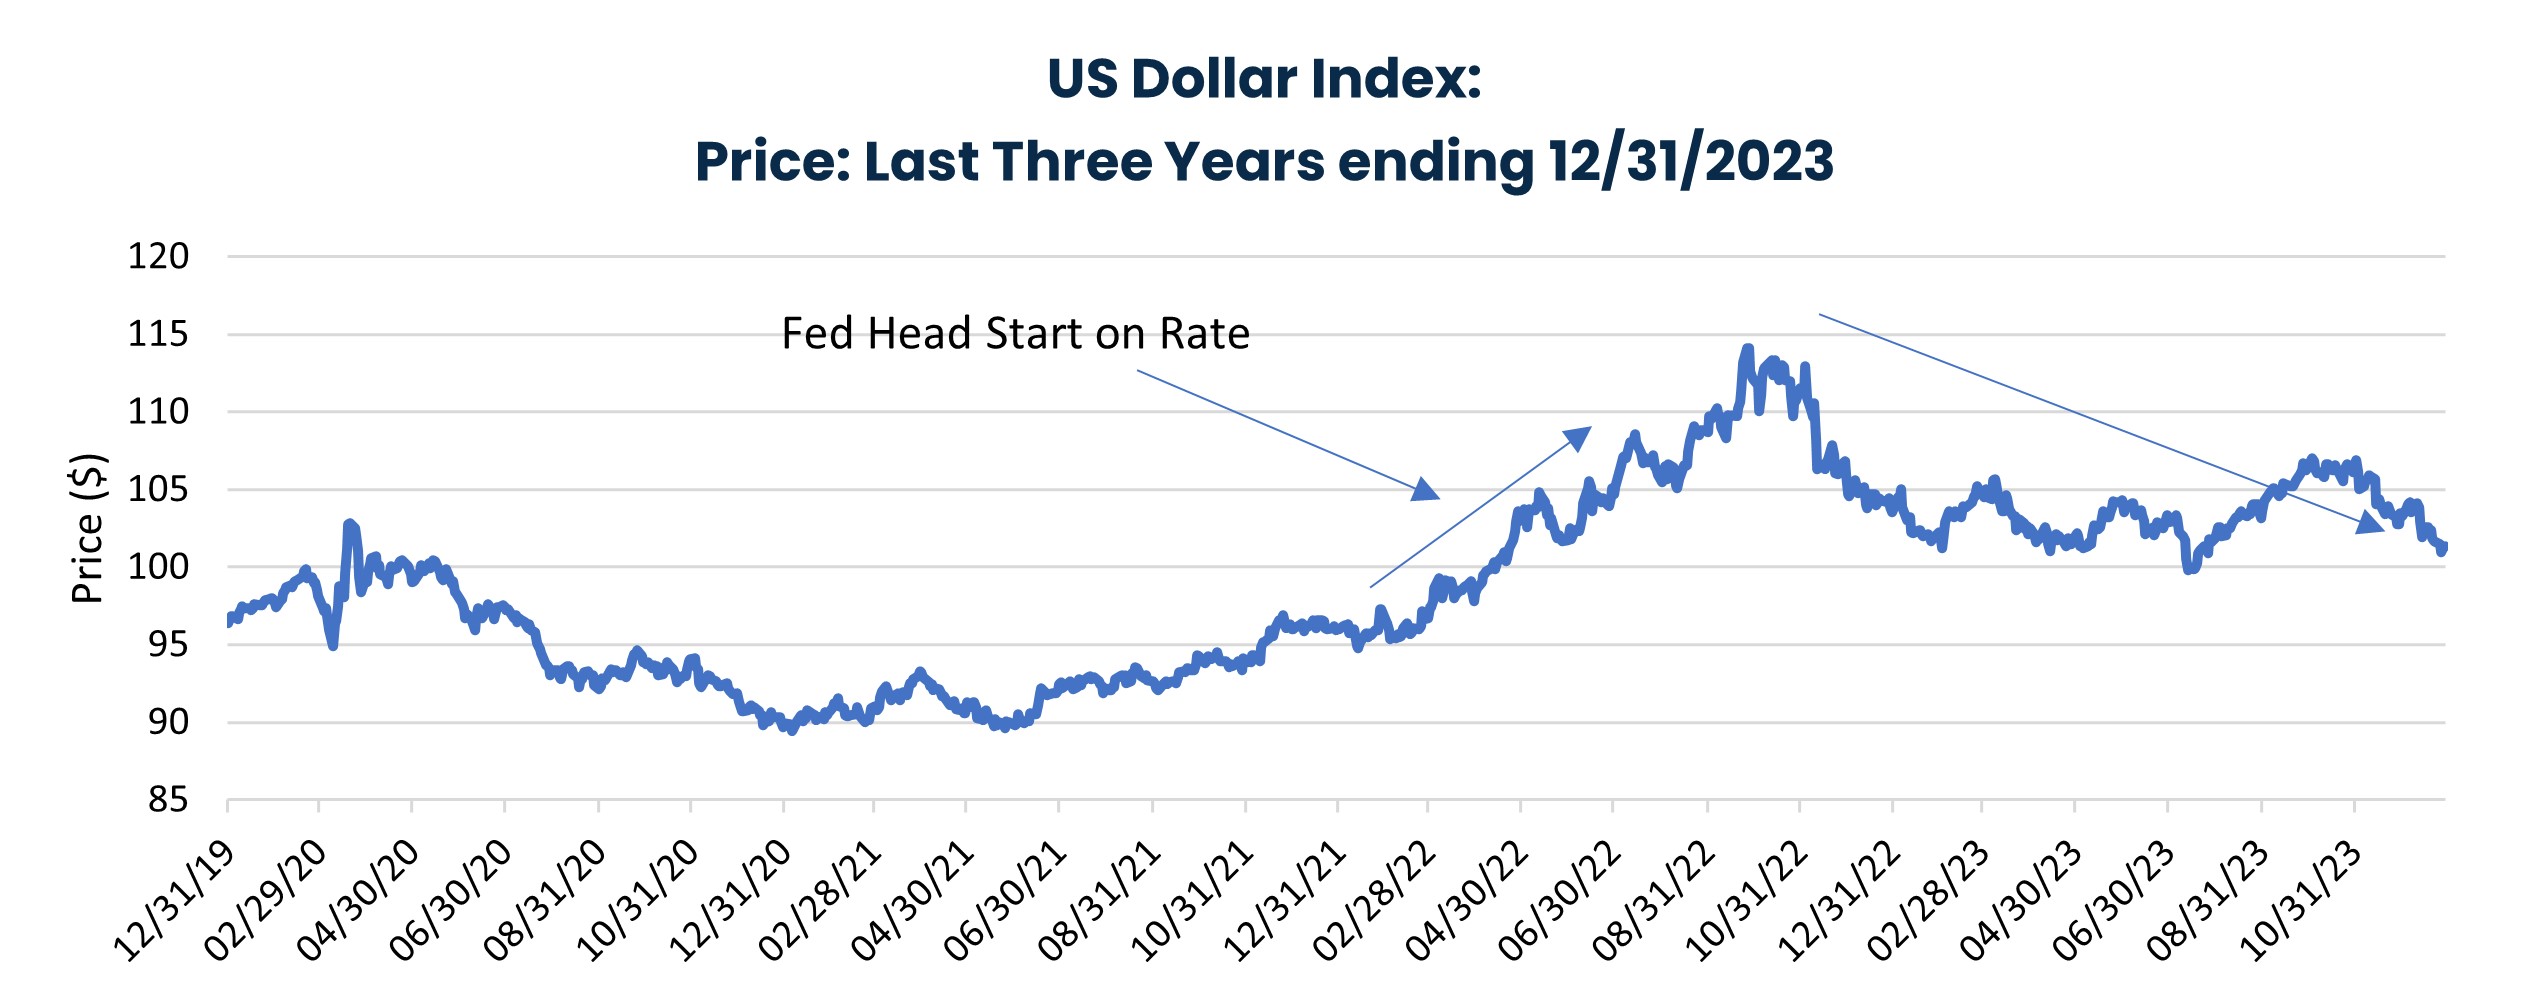 US Dollar Index: Price: Last Three Years Ending 12/31/2023